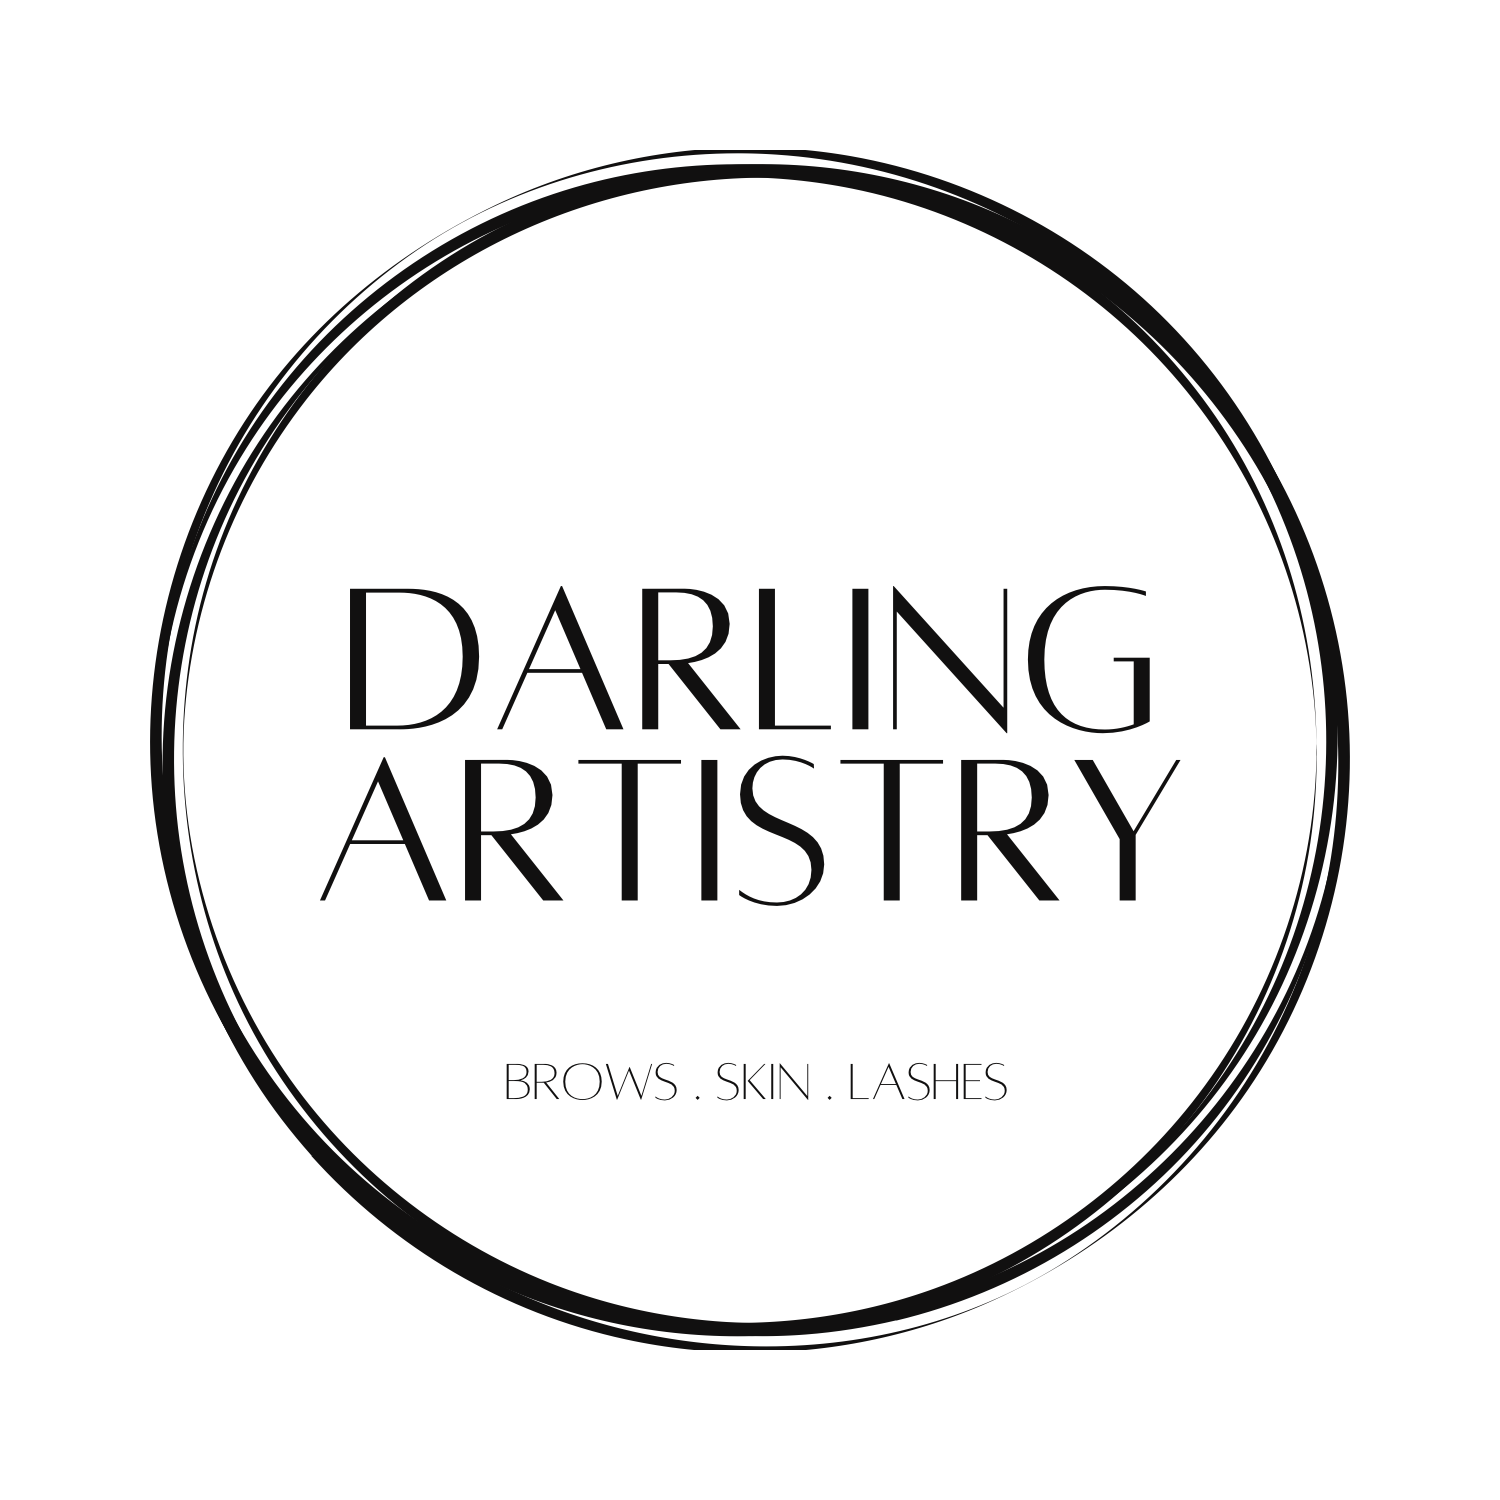 Darling Artistry